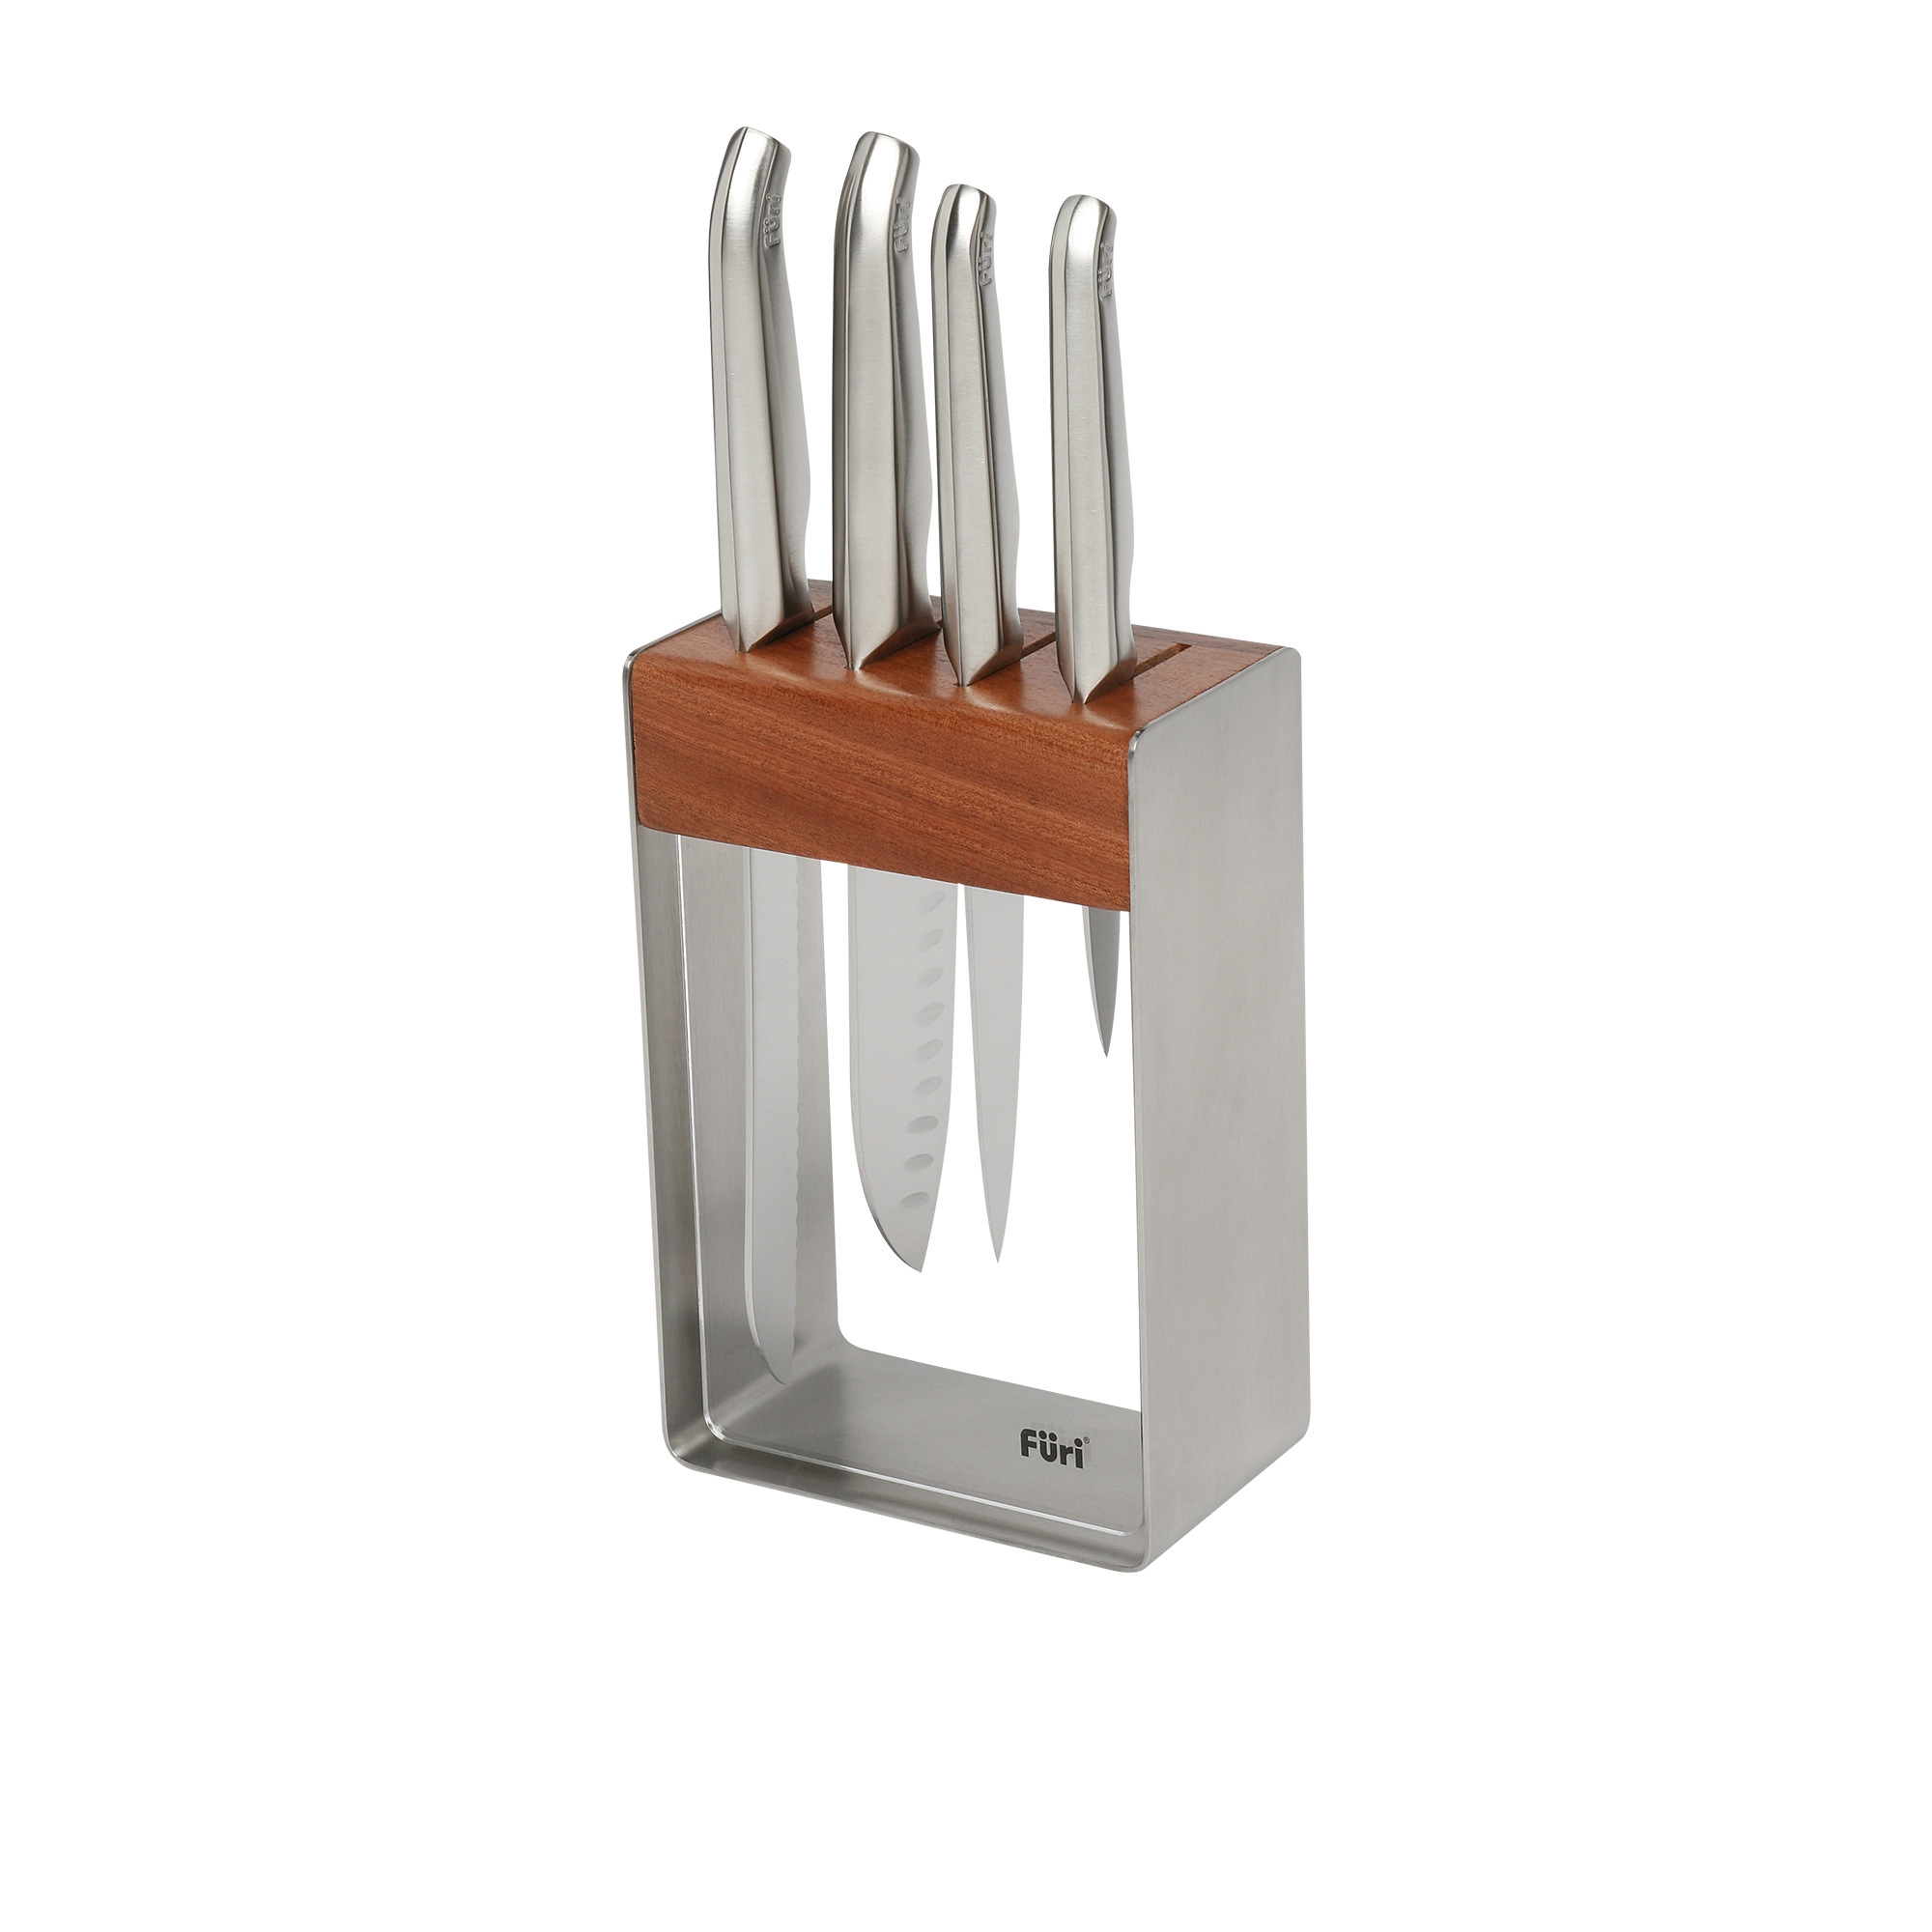 Furi Pro 5pc Stainless Steel Knife Block Set Image 1